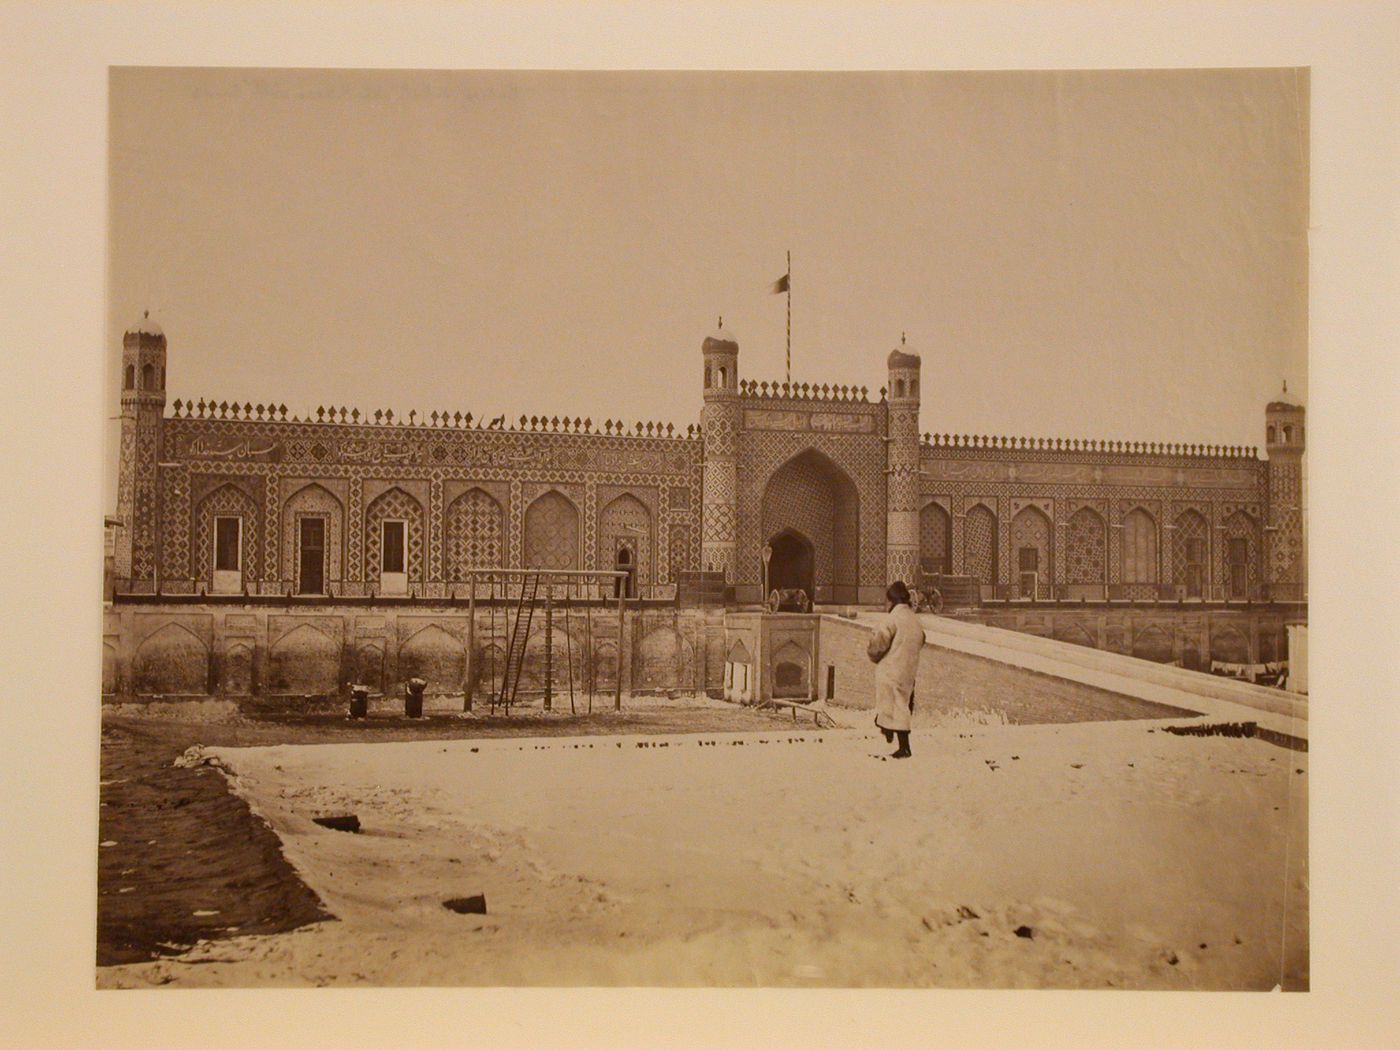 Entrance and façade of the palace of Emile, Bukhara, Uzbekistan, former Soviet Union